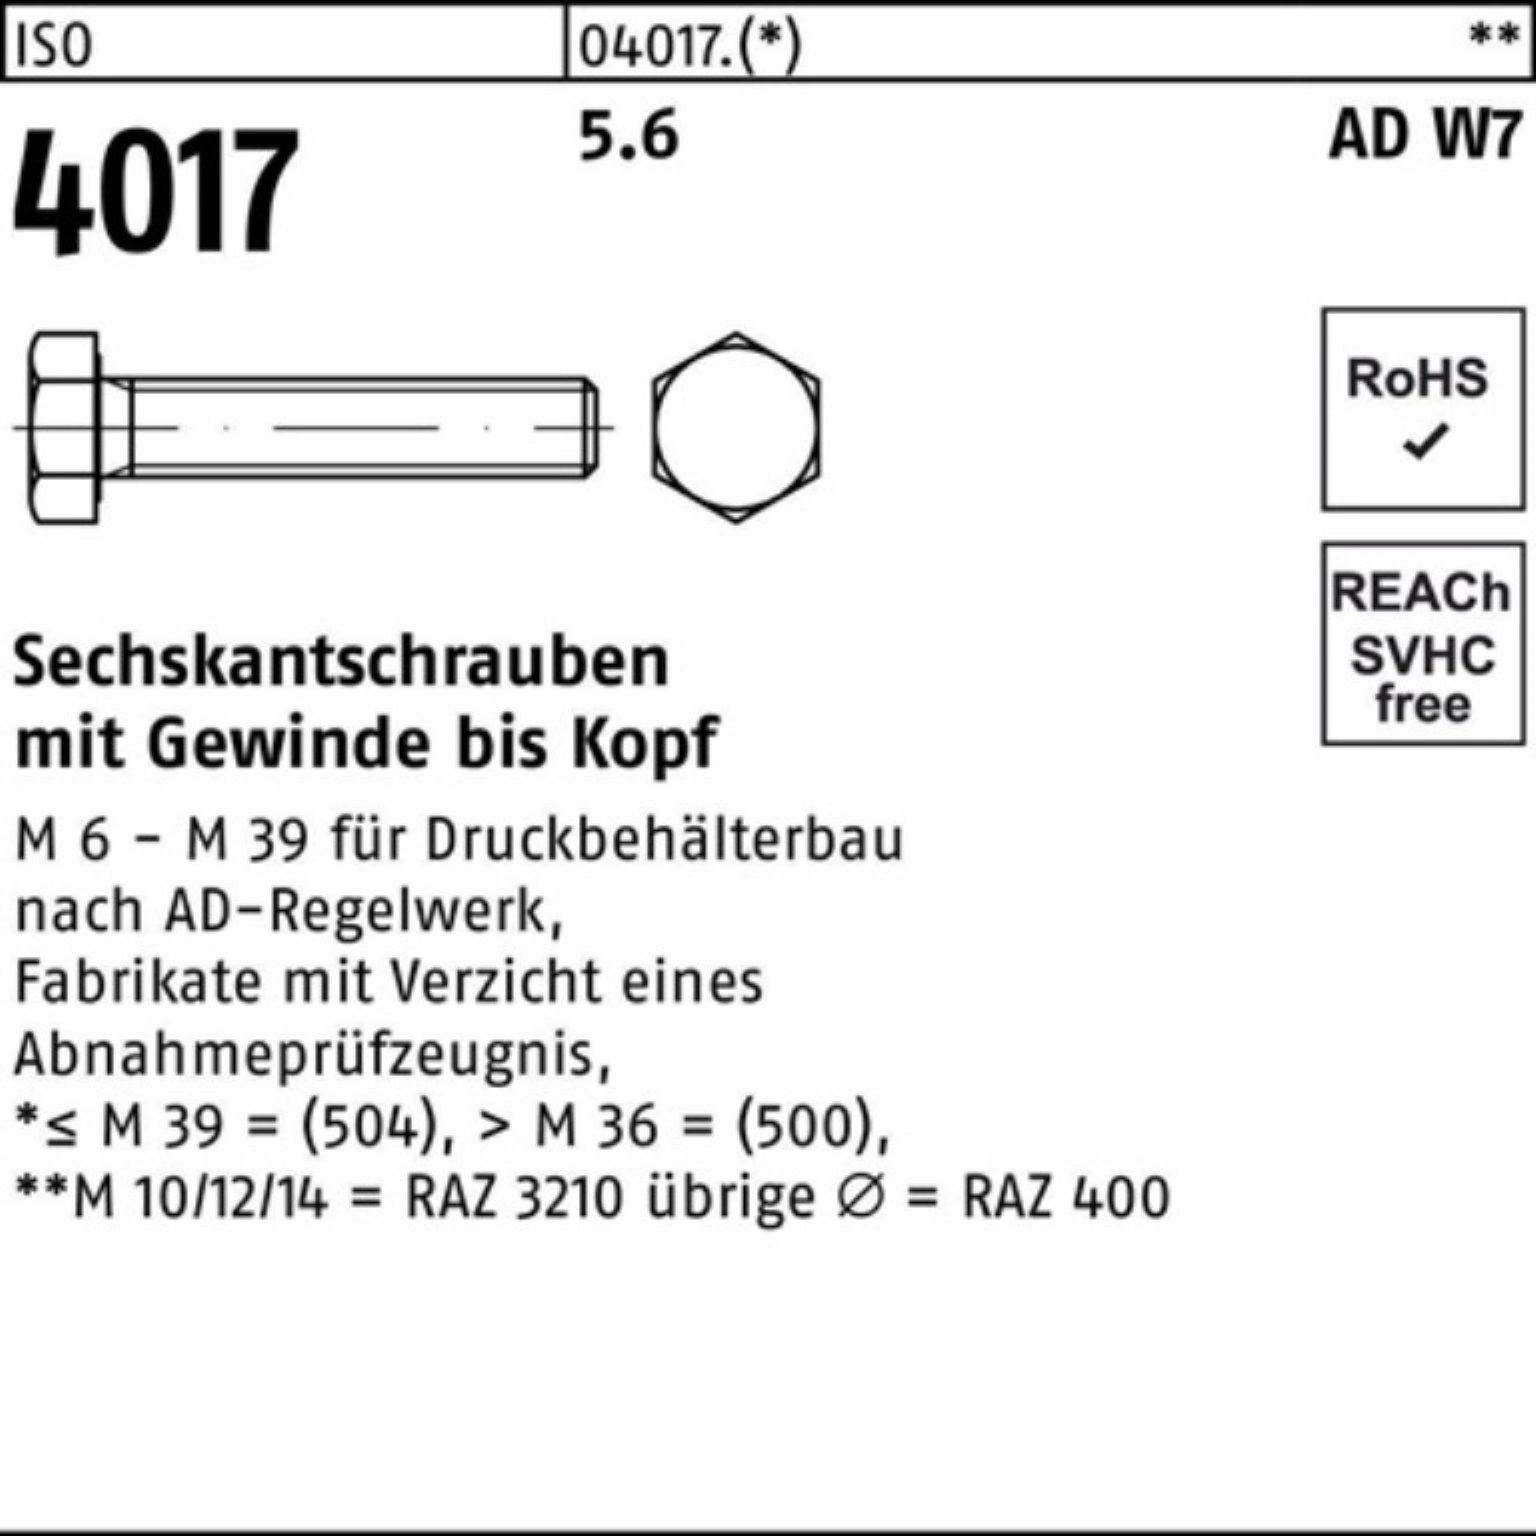 Sechskantschraube 100 Stück 5.6 VG M16x AD W7 100er ISO Pack 25 Sechskantschraube Bufab 4017